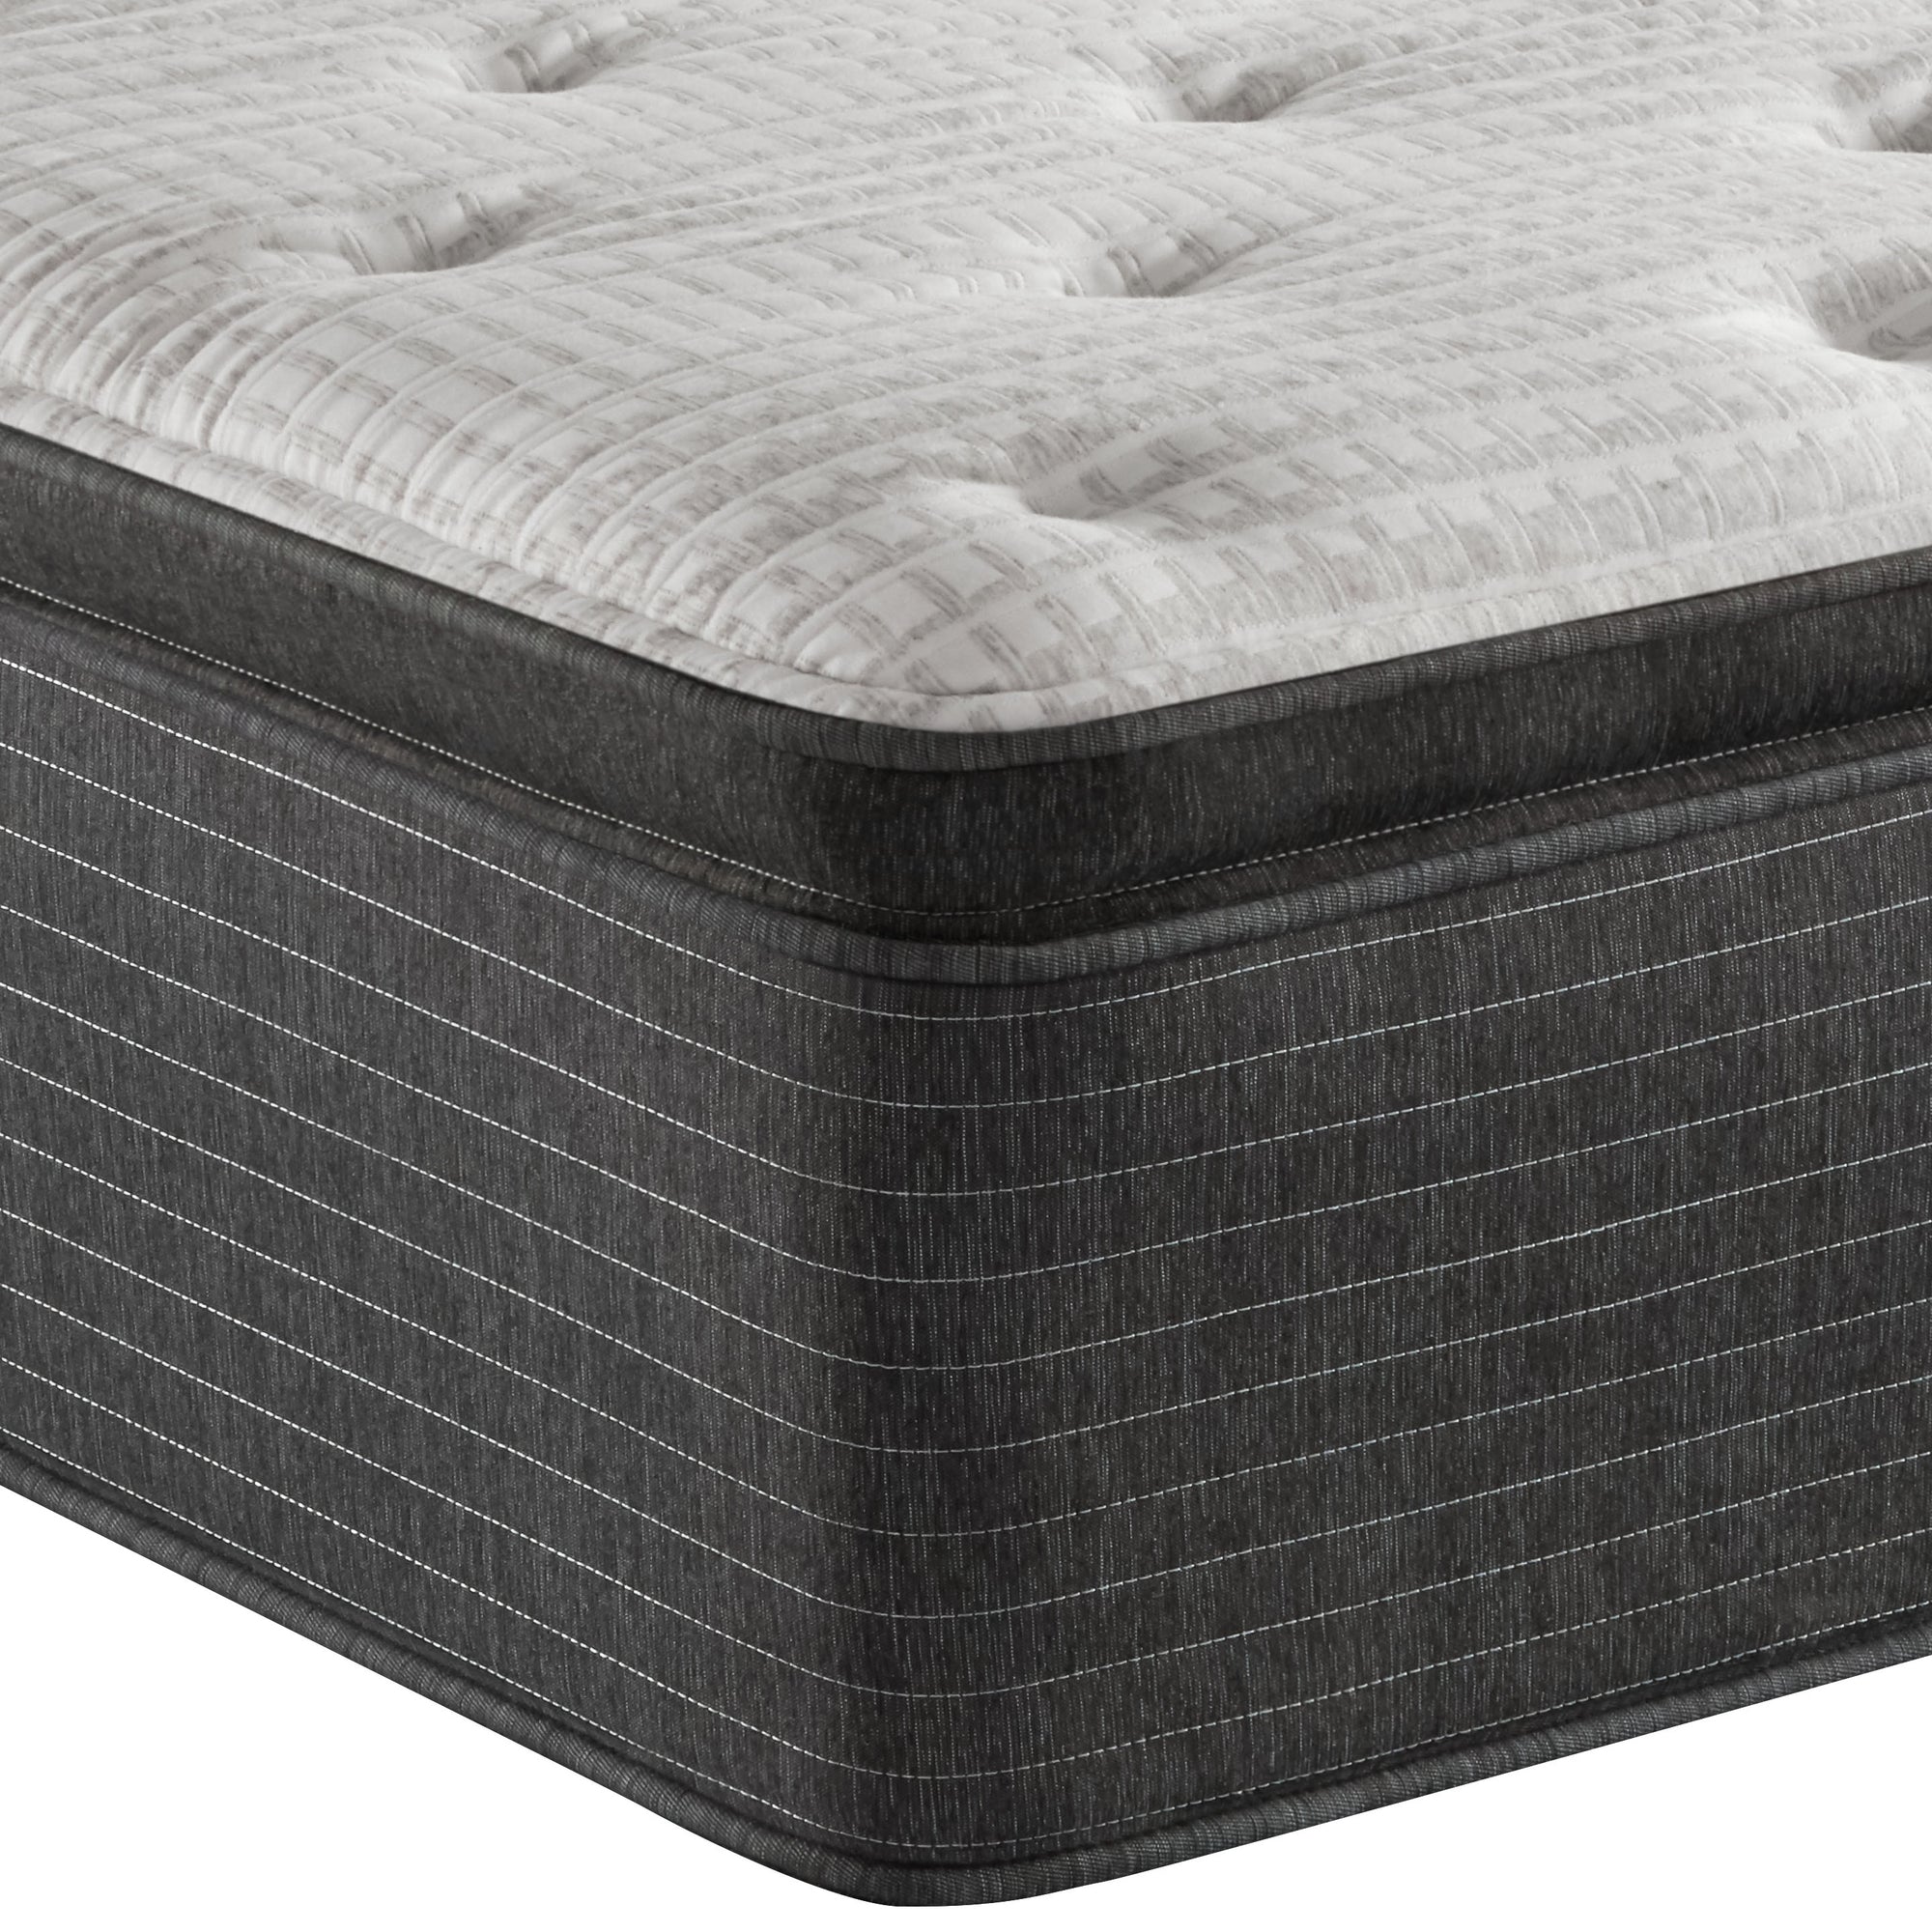 Corner view of the Beautyrest Silver BRS900-C Plush Pillow Top mattress